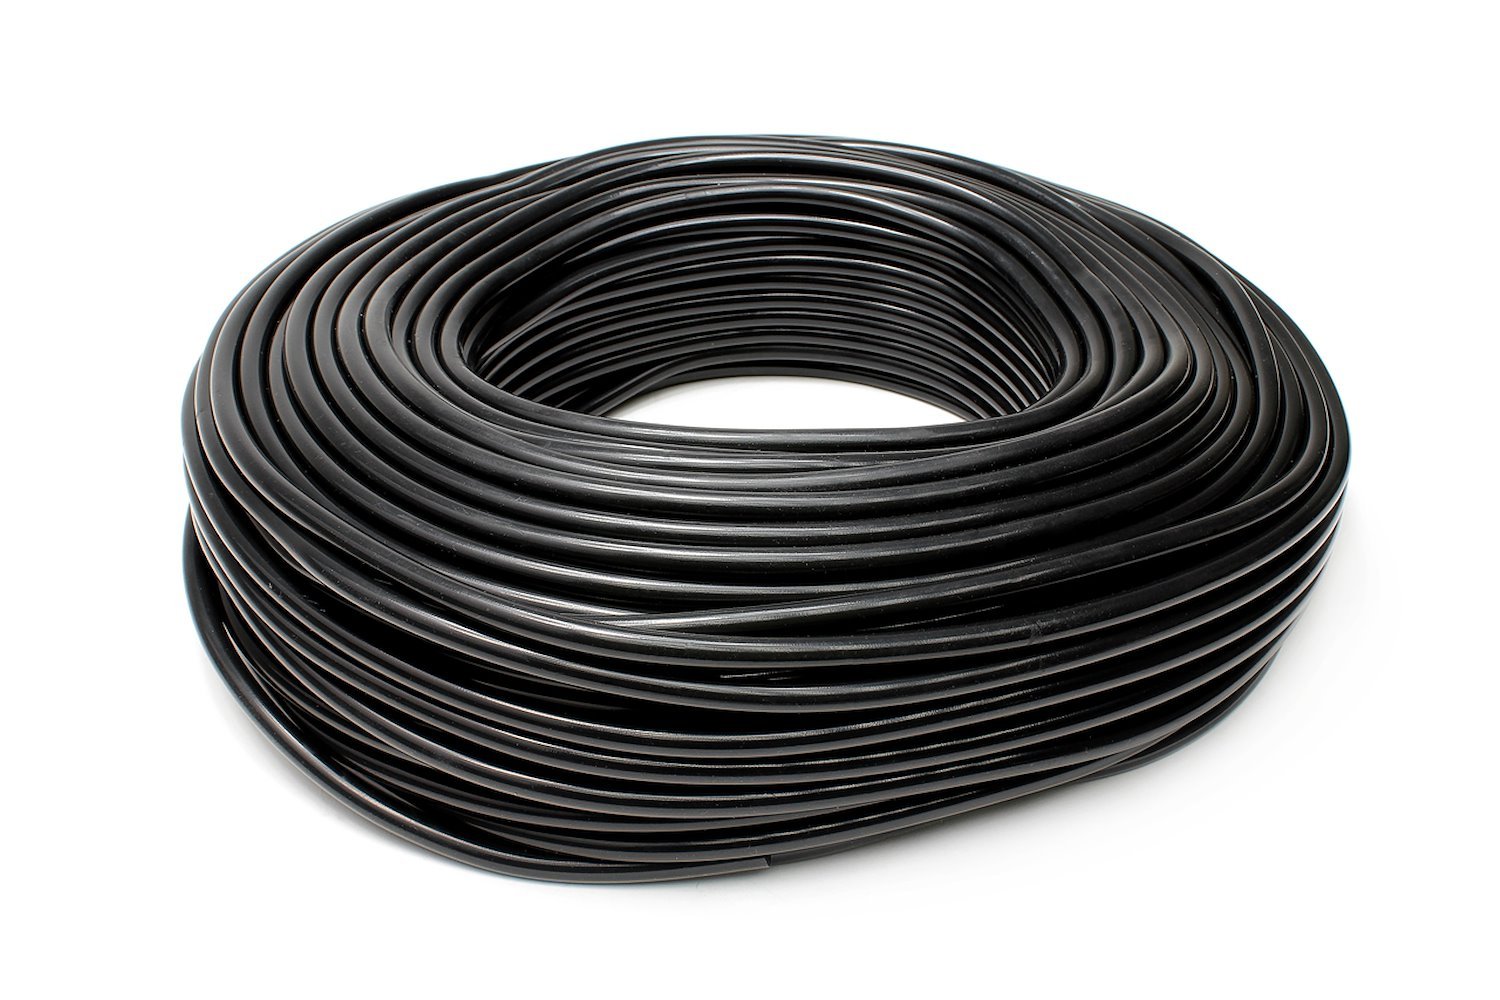 HTSVH5-BLKx50 High-Temperature Silicone Vacuum Hose Tubing, 13/64 in. ID, 50 ft. Roll, Black